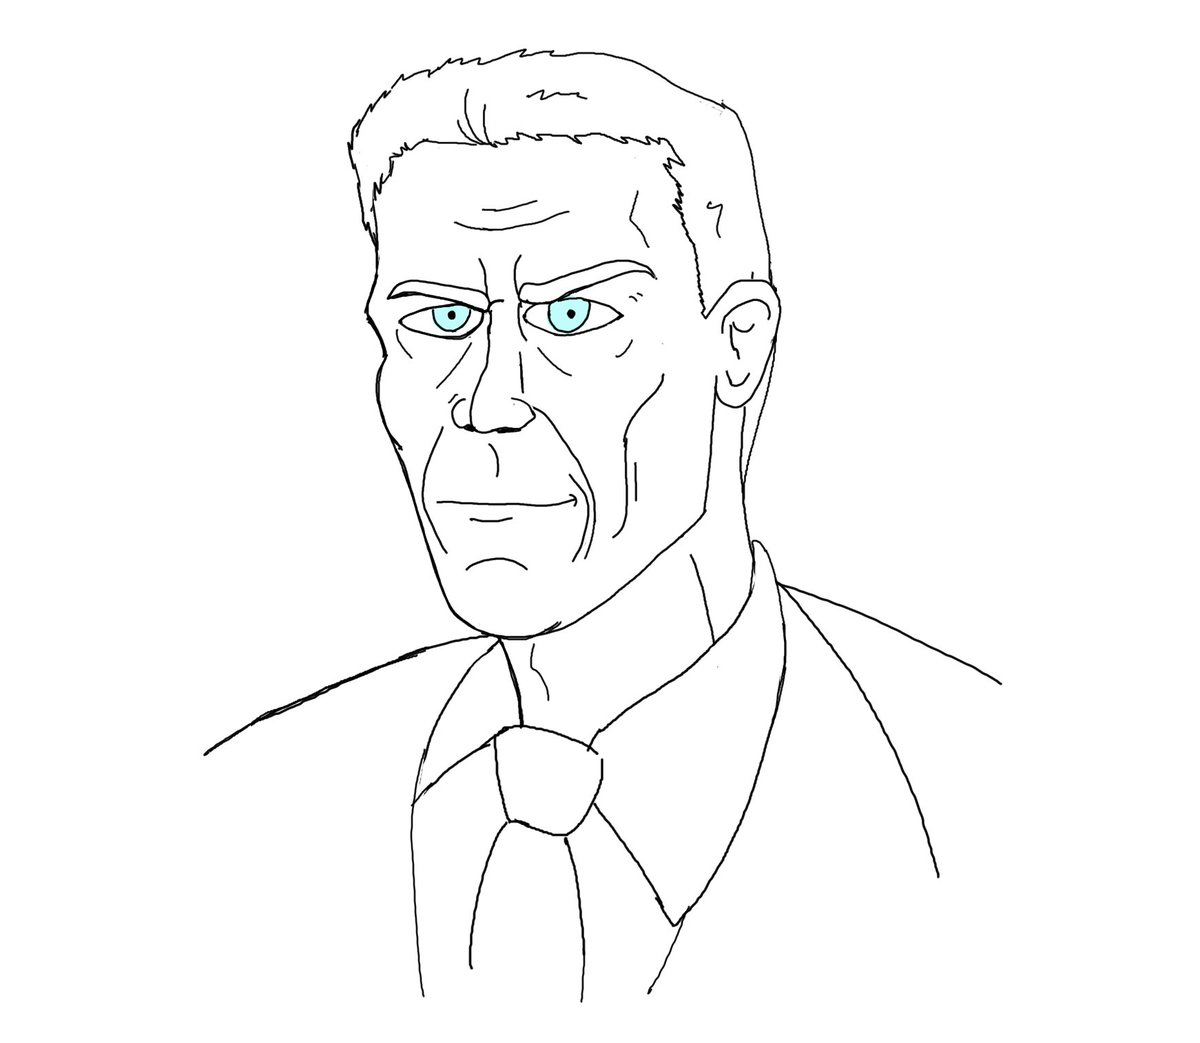 an attempt to draw gman from #HalfLife #HalfLifeAlyx 